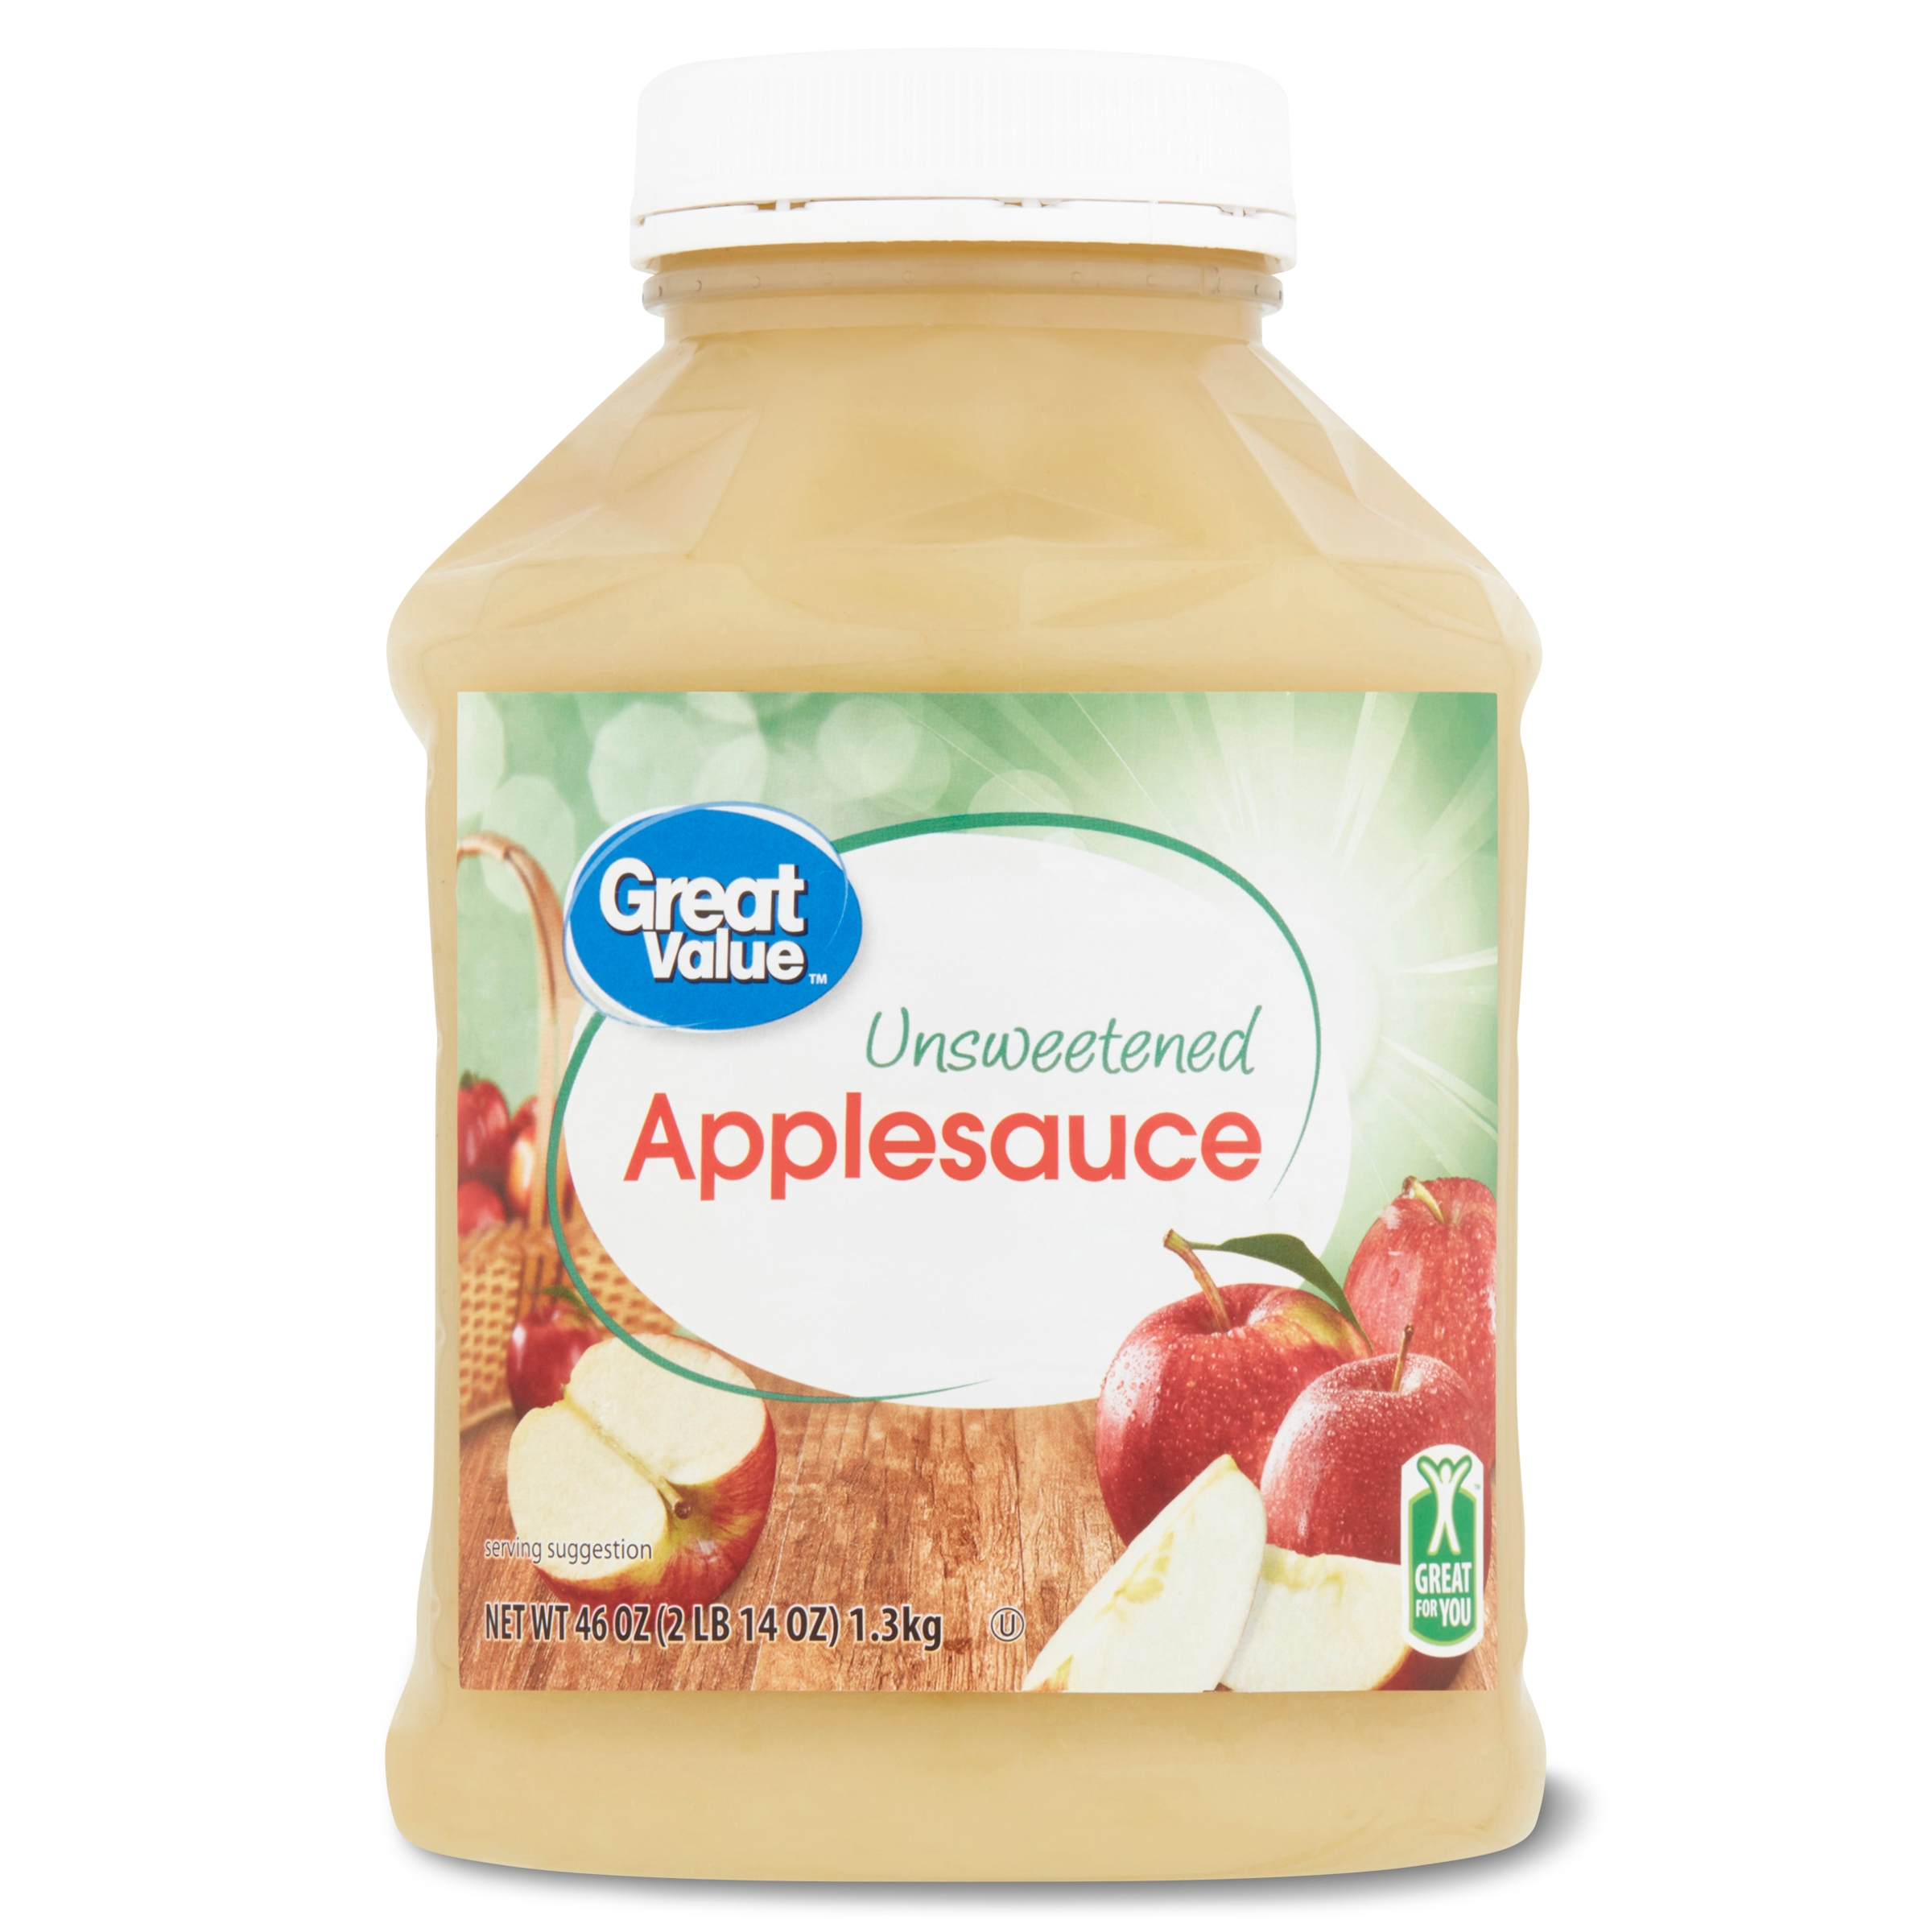 Great Value Unsweetened Applesauce, 46 oz Jar - image 1 of 7